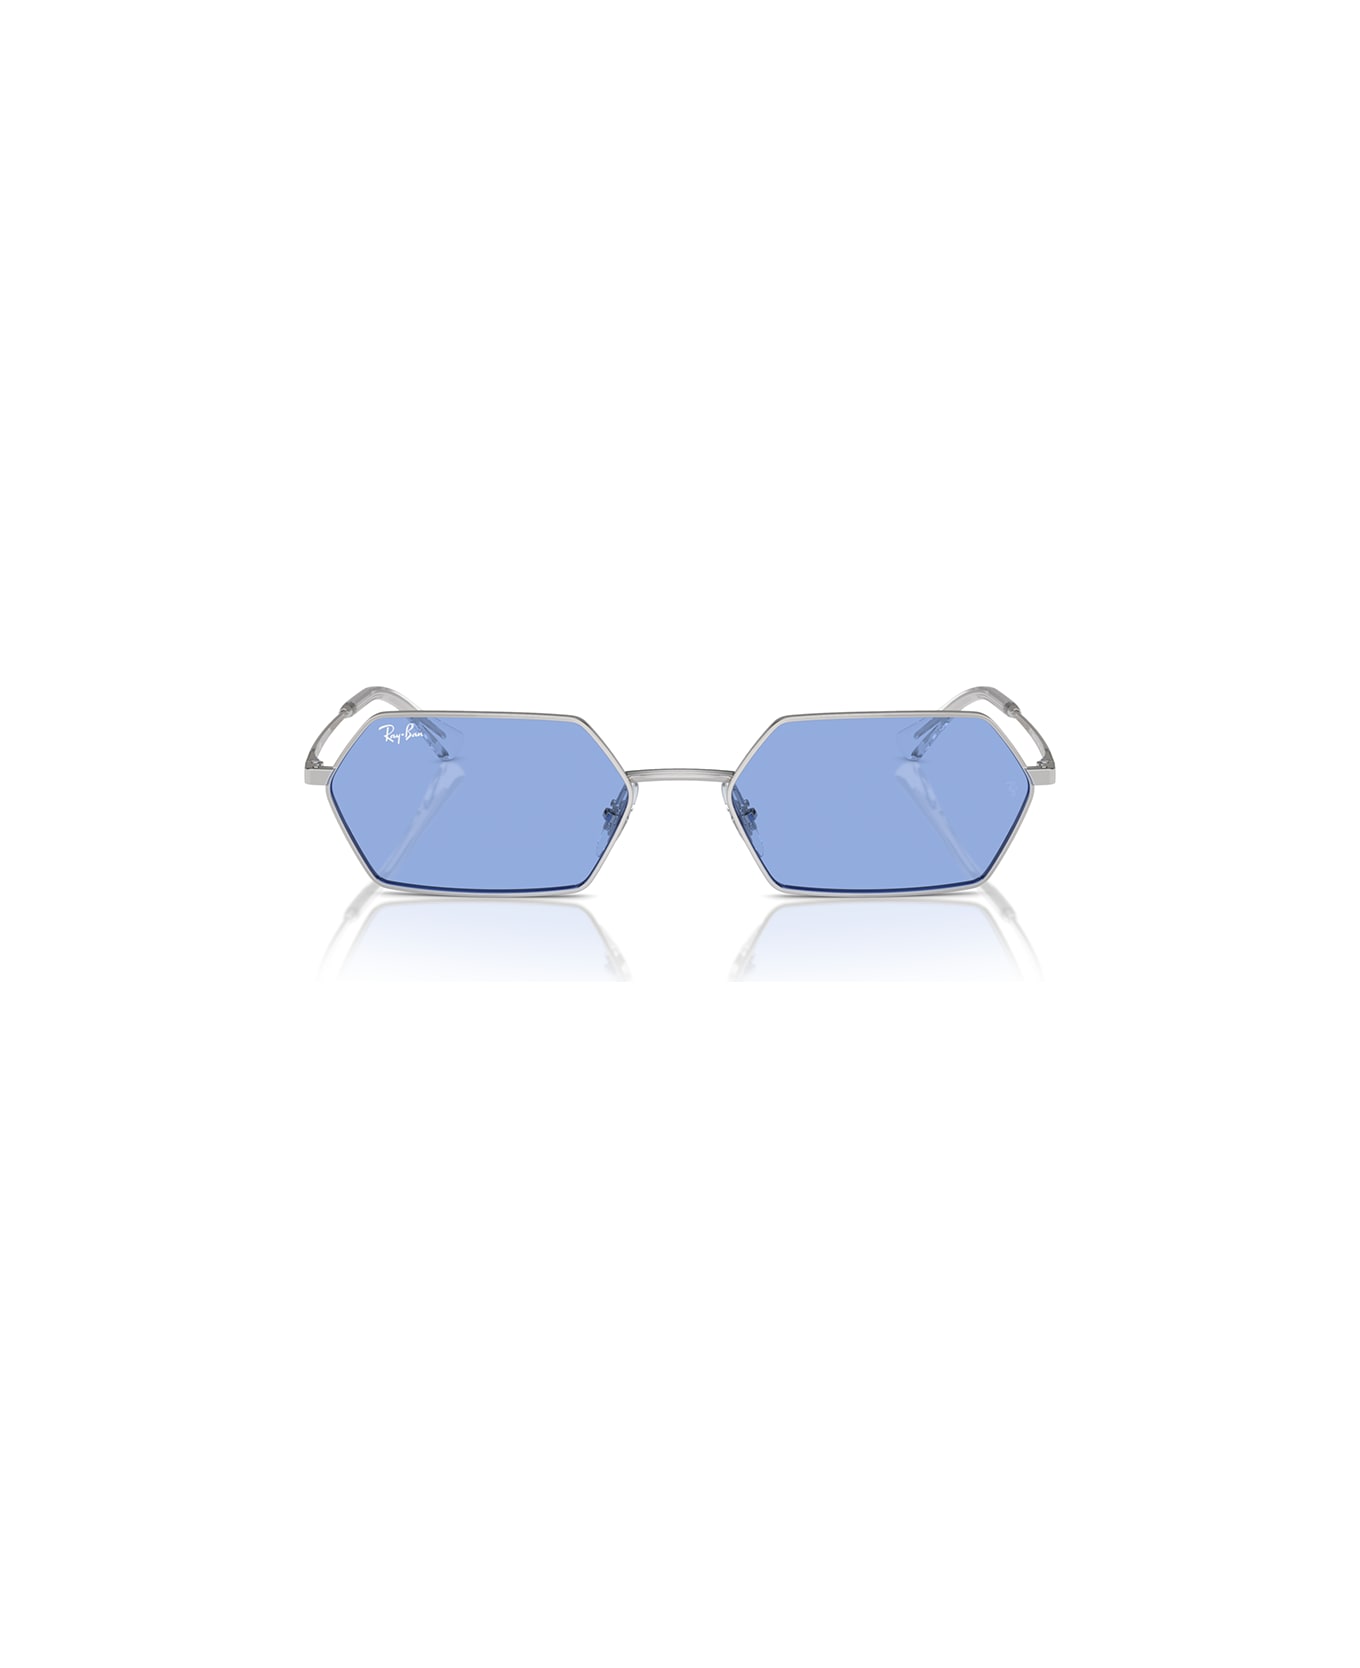 Ray-Ban Sunglasses - Silver/Blu サングラス